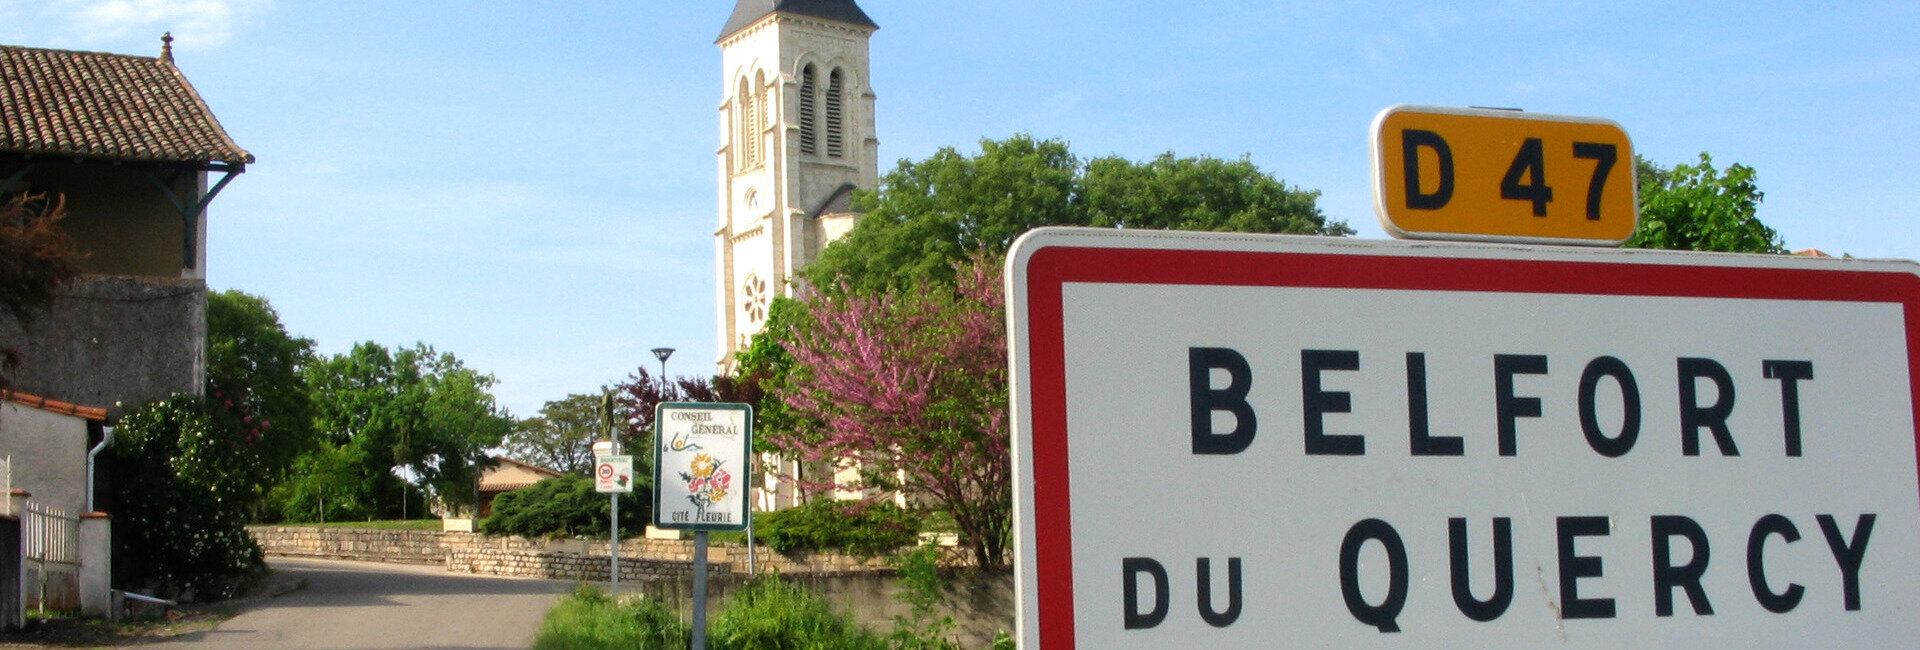 Mairie de Belfort du Quercy - Lot